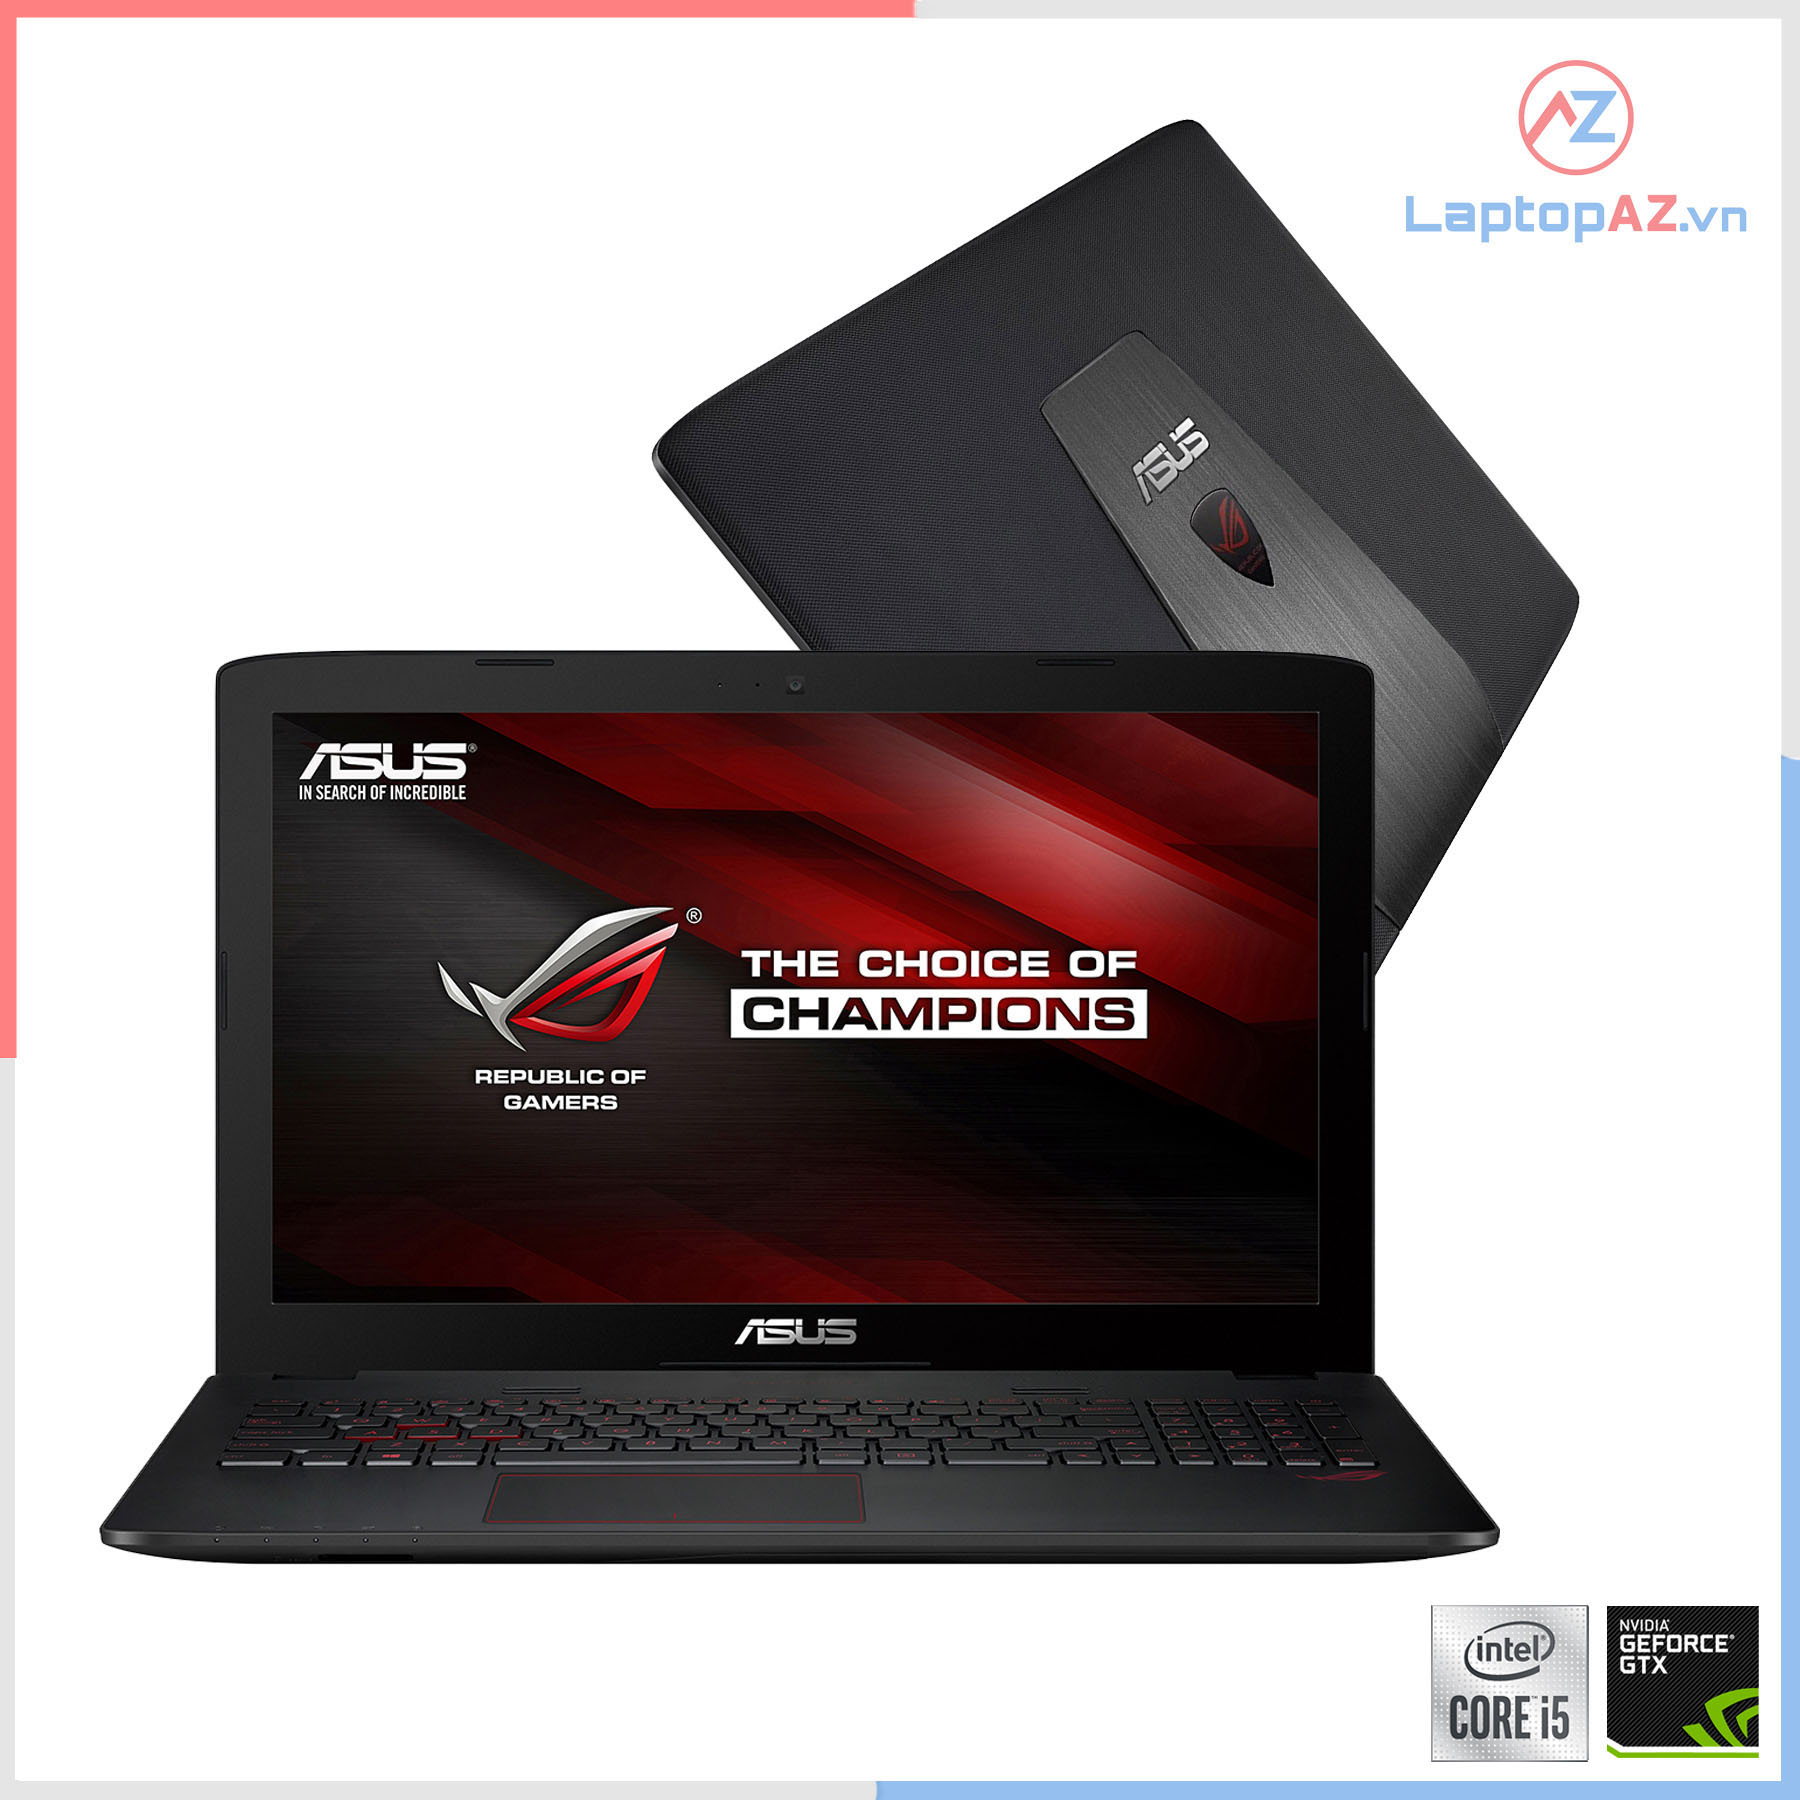 Laptop Asus GL552JX XO093D (Core i5-4200H, 6GB, 1000GB, VGA 2GB Nvidia GTX 950M, 15.6 inch)